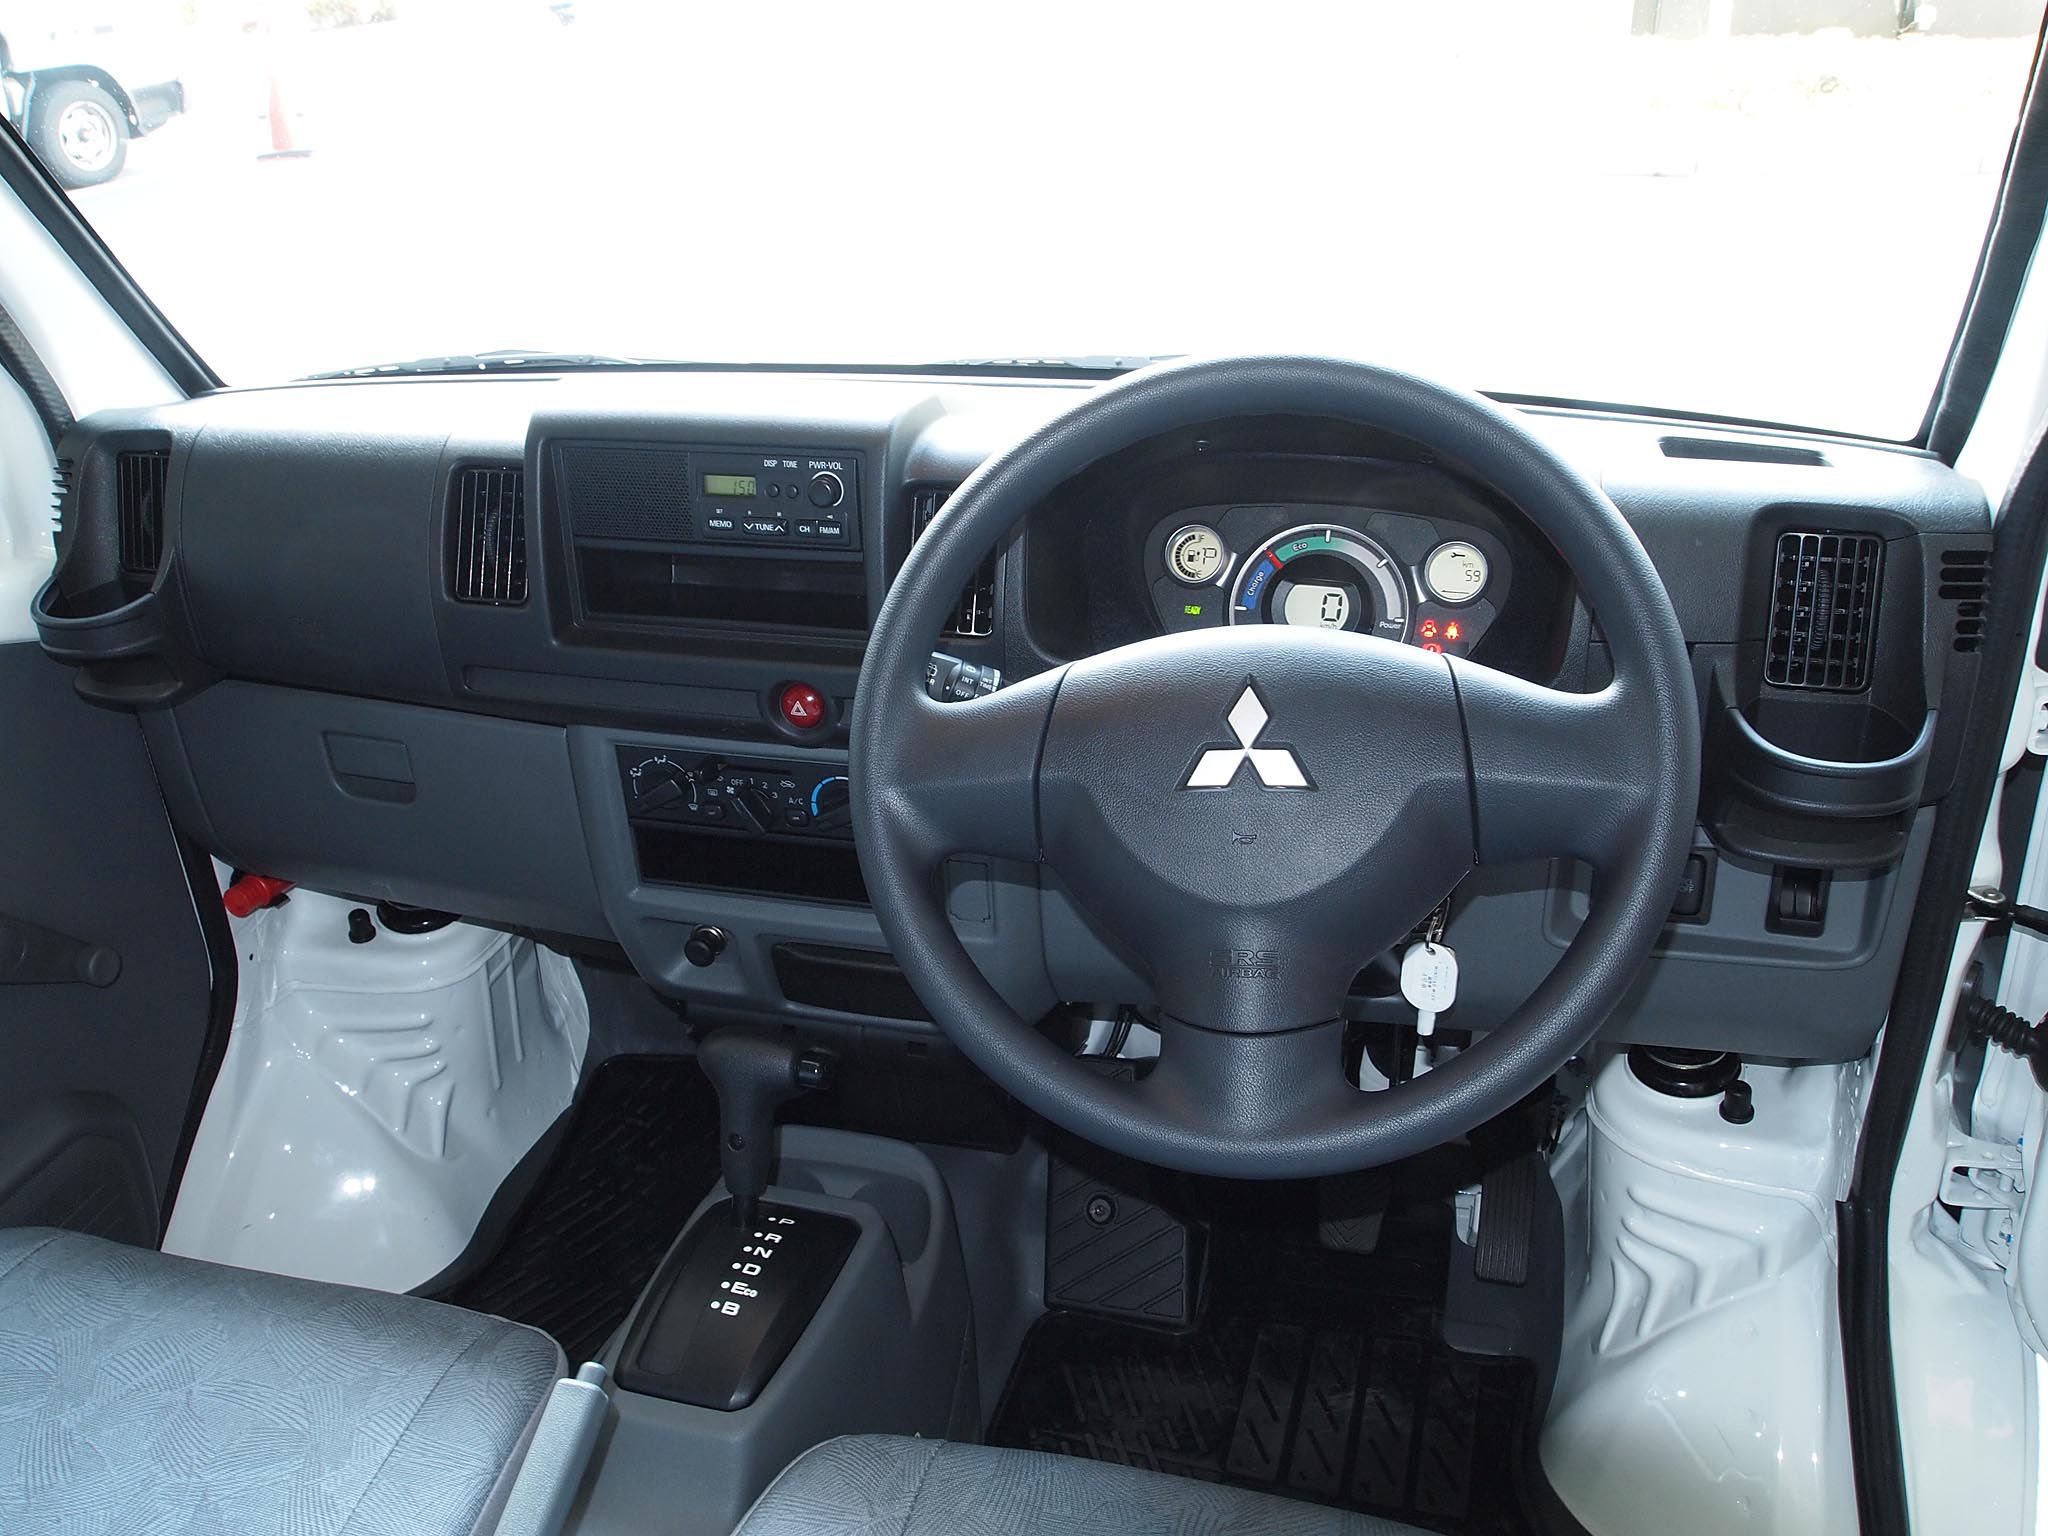 Datei Mitsubishi Motors Minicab Miev Cockpit Jpg Wikipedia